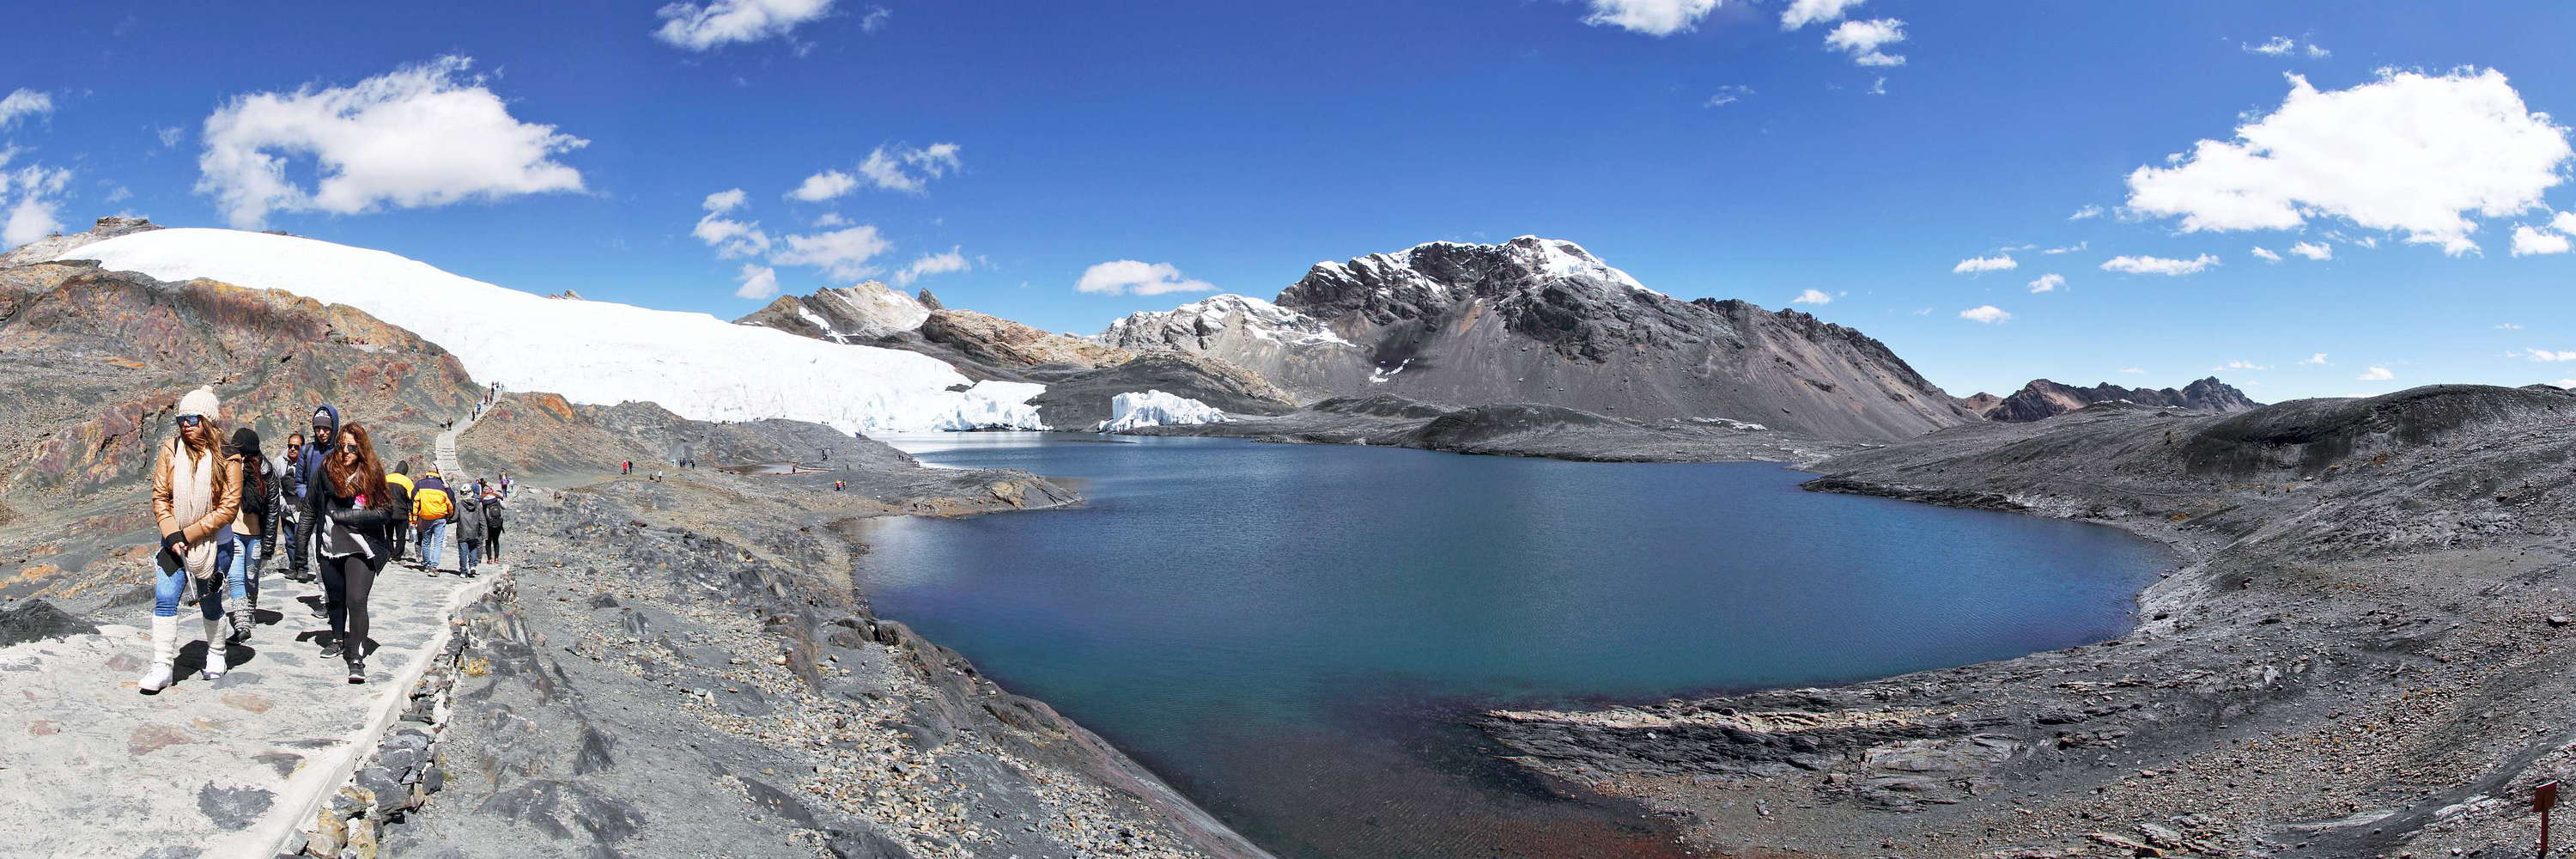 Glaciar Pastoruri with proglacial lake